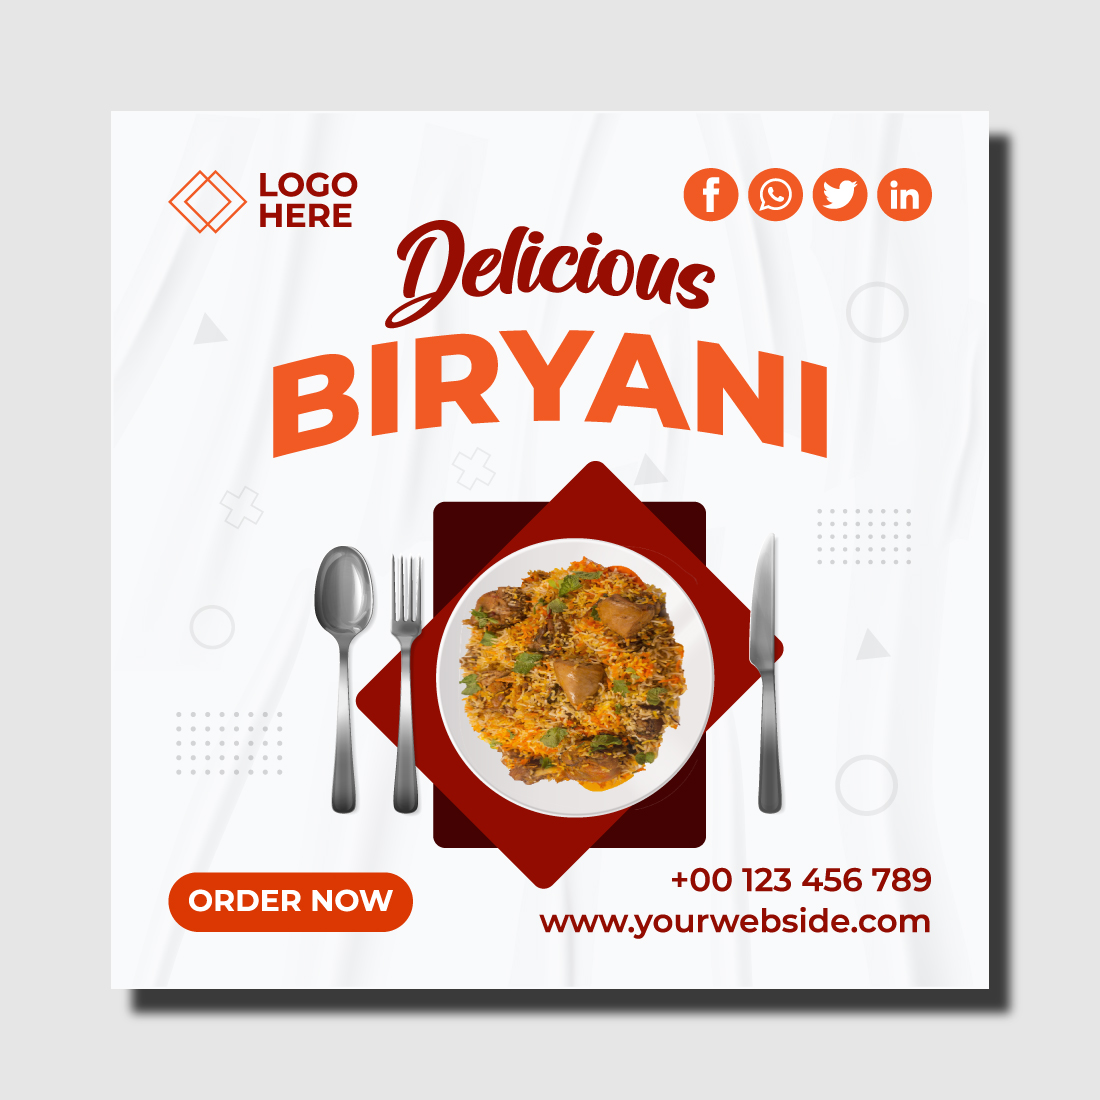 Delicious Biryani- social media post preview image.